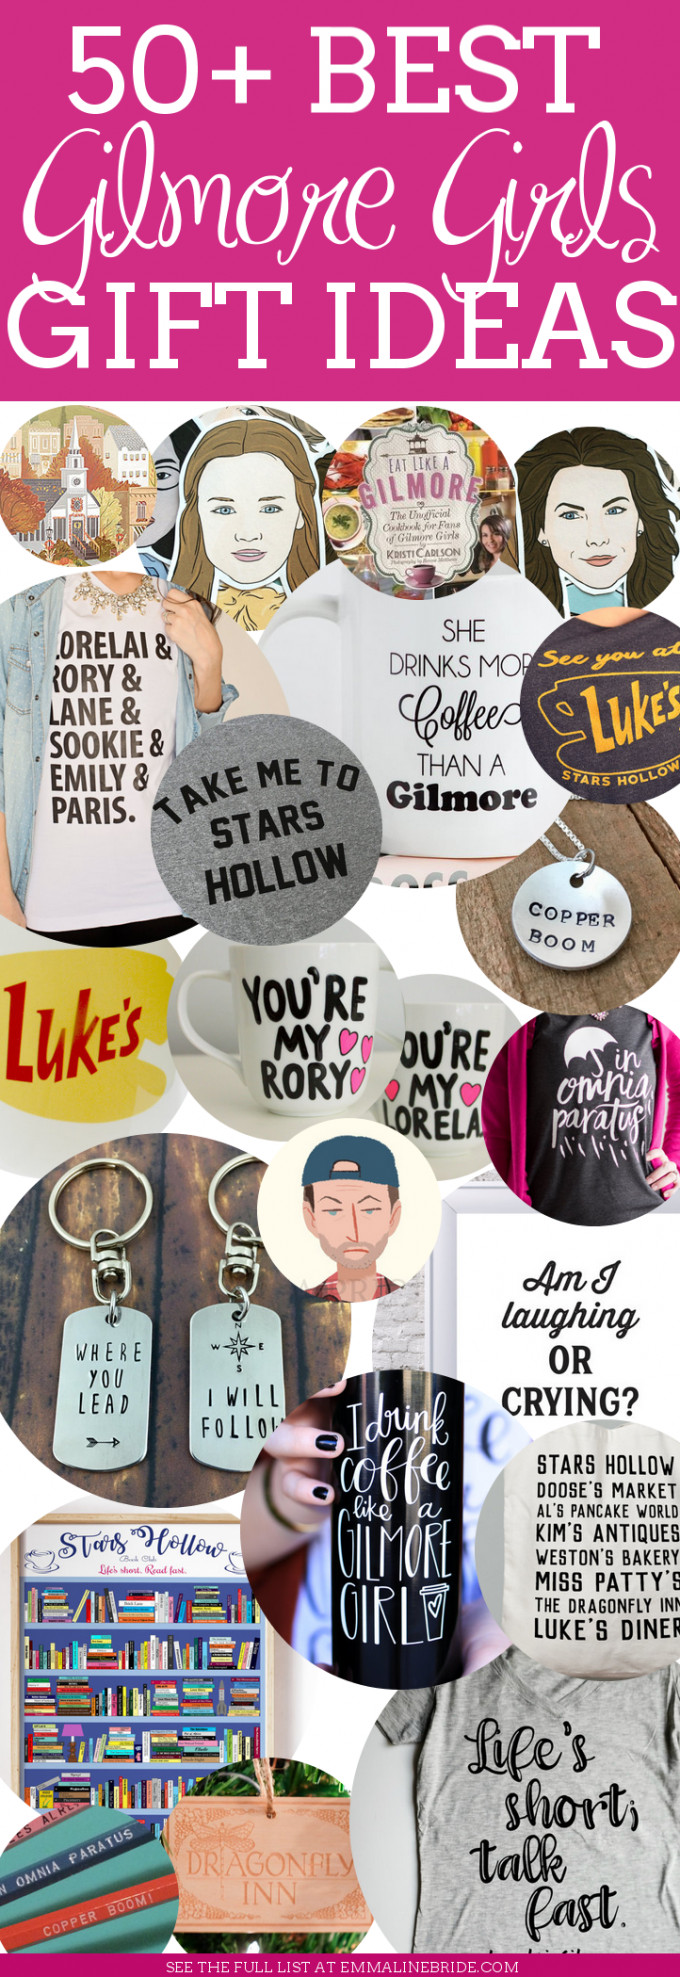 Gilmore Girls Gift Ideas
 50 Best Gilmore Girls Gift Ideas Every Fan Will Love